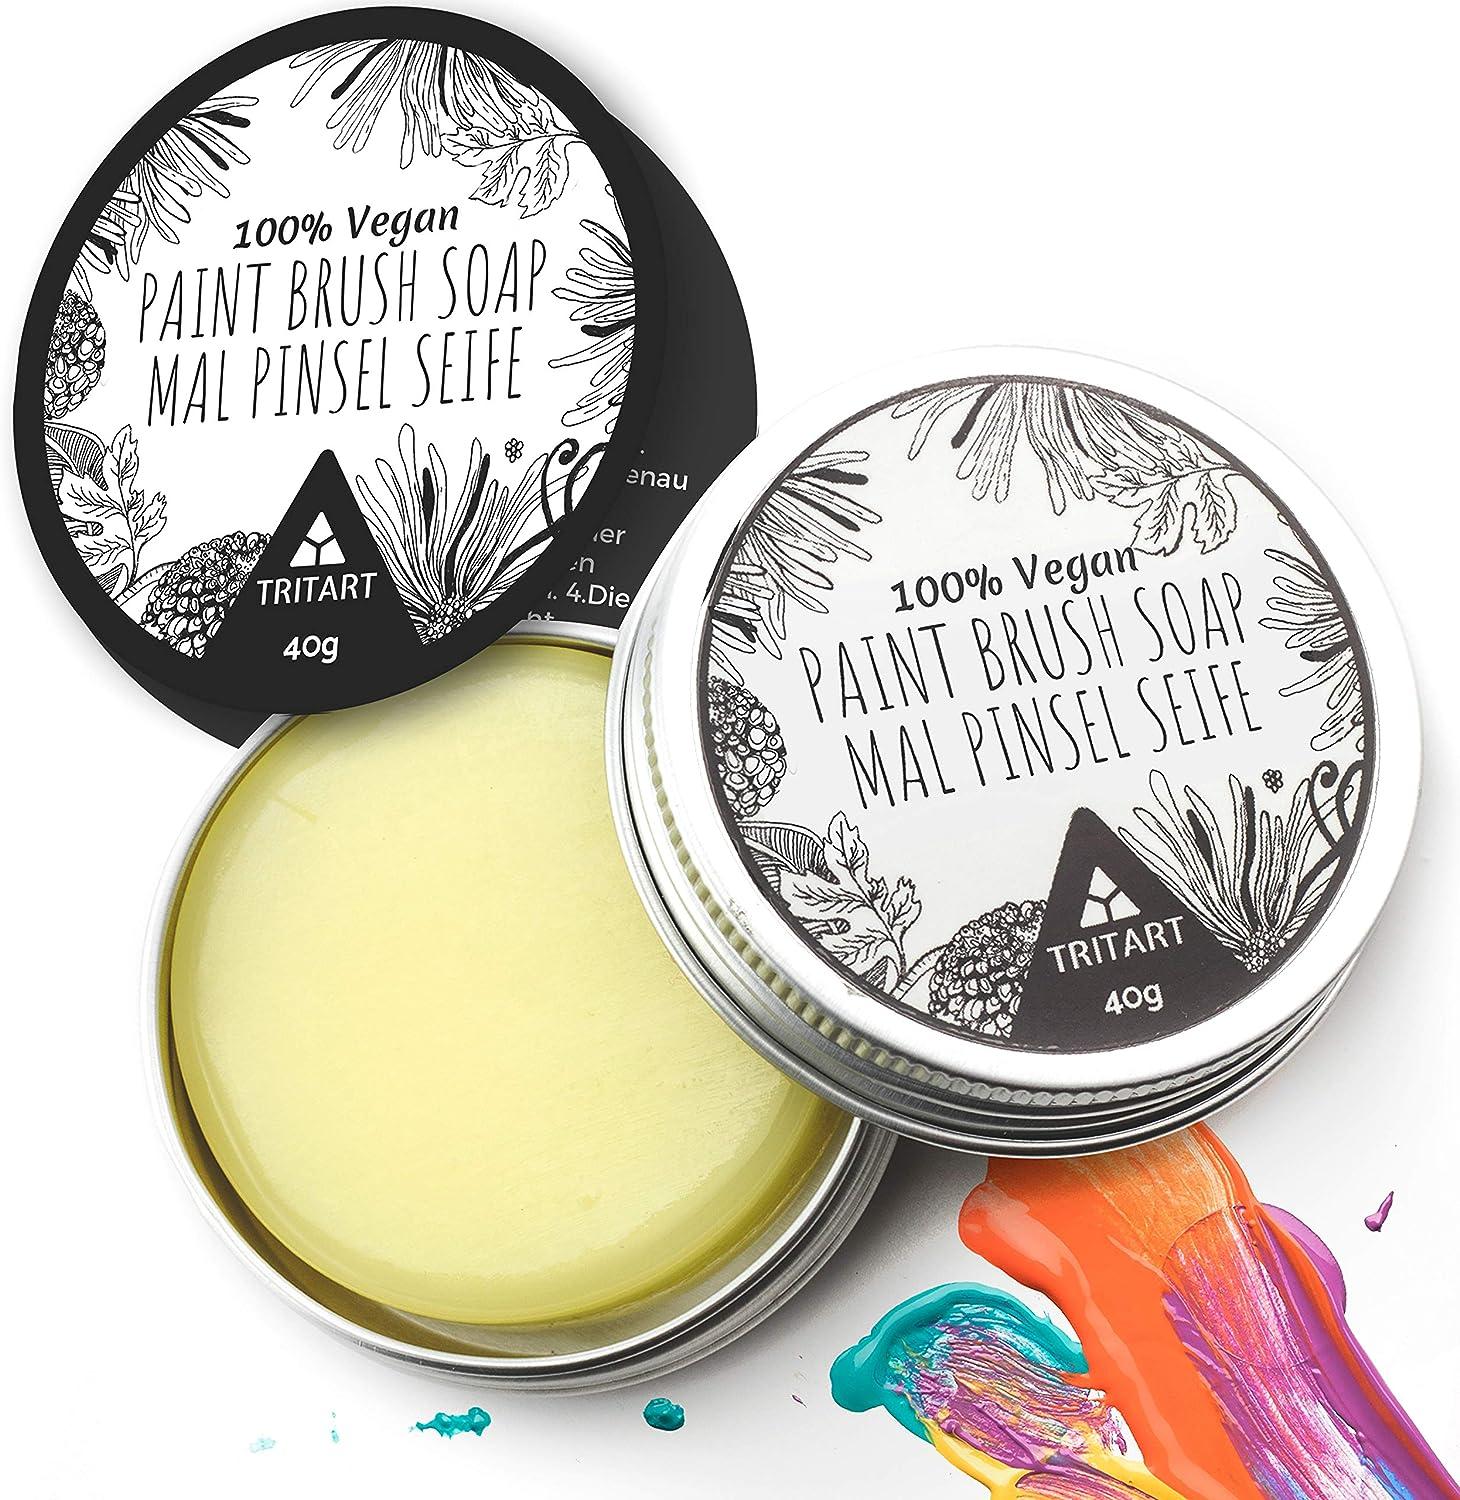 Tritart 100% Vegan Paint Brush Cleaner Soap for Watercolor & Acrylic Paint  Brushes - Lemon Scented Paint Soap for Cleaning Oil Paint Brushes